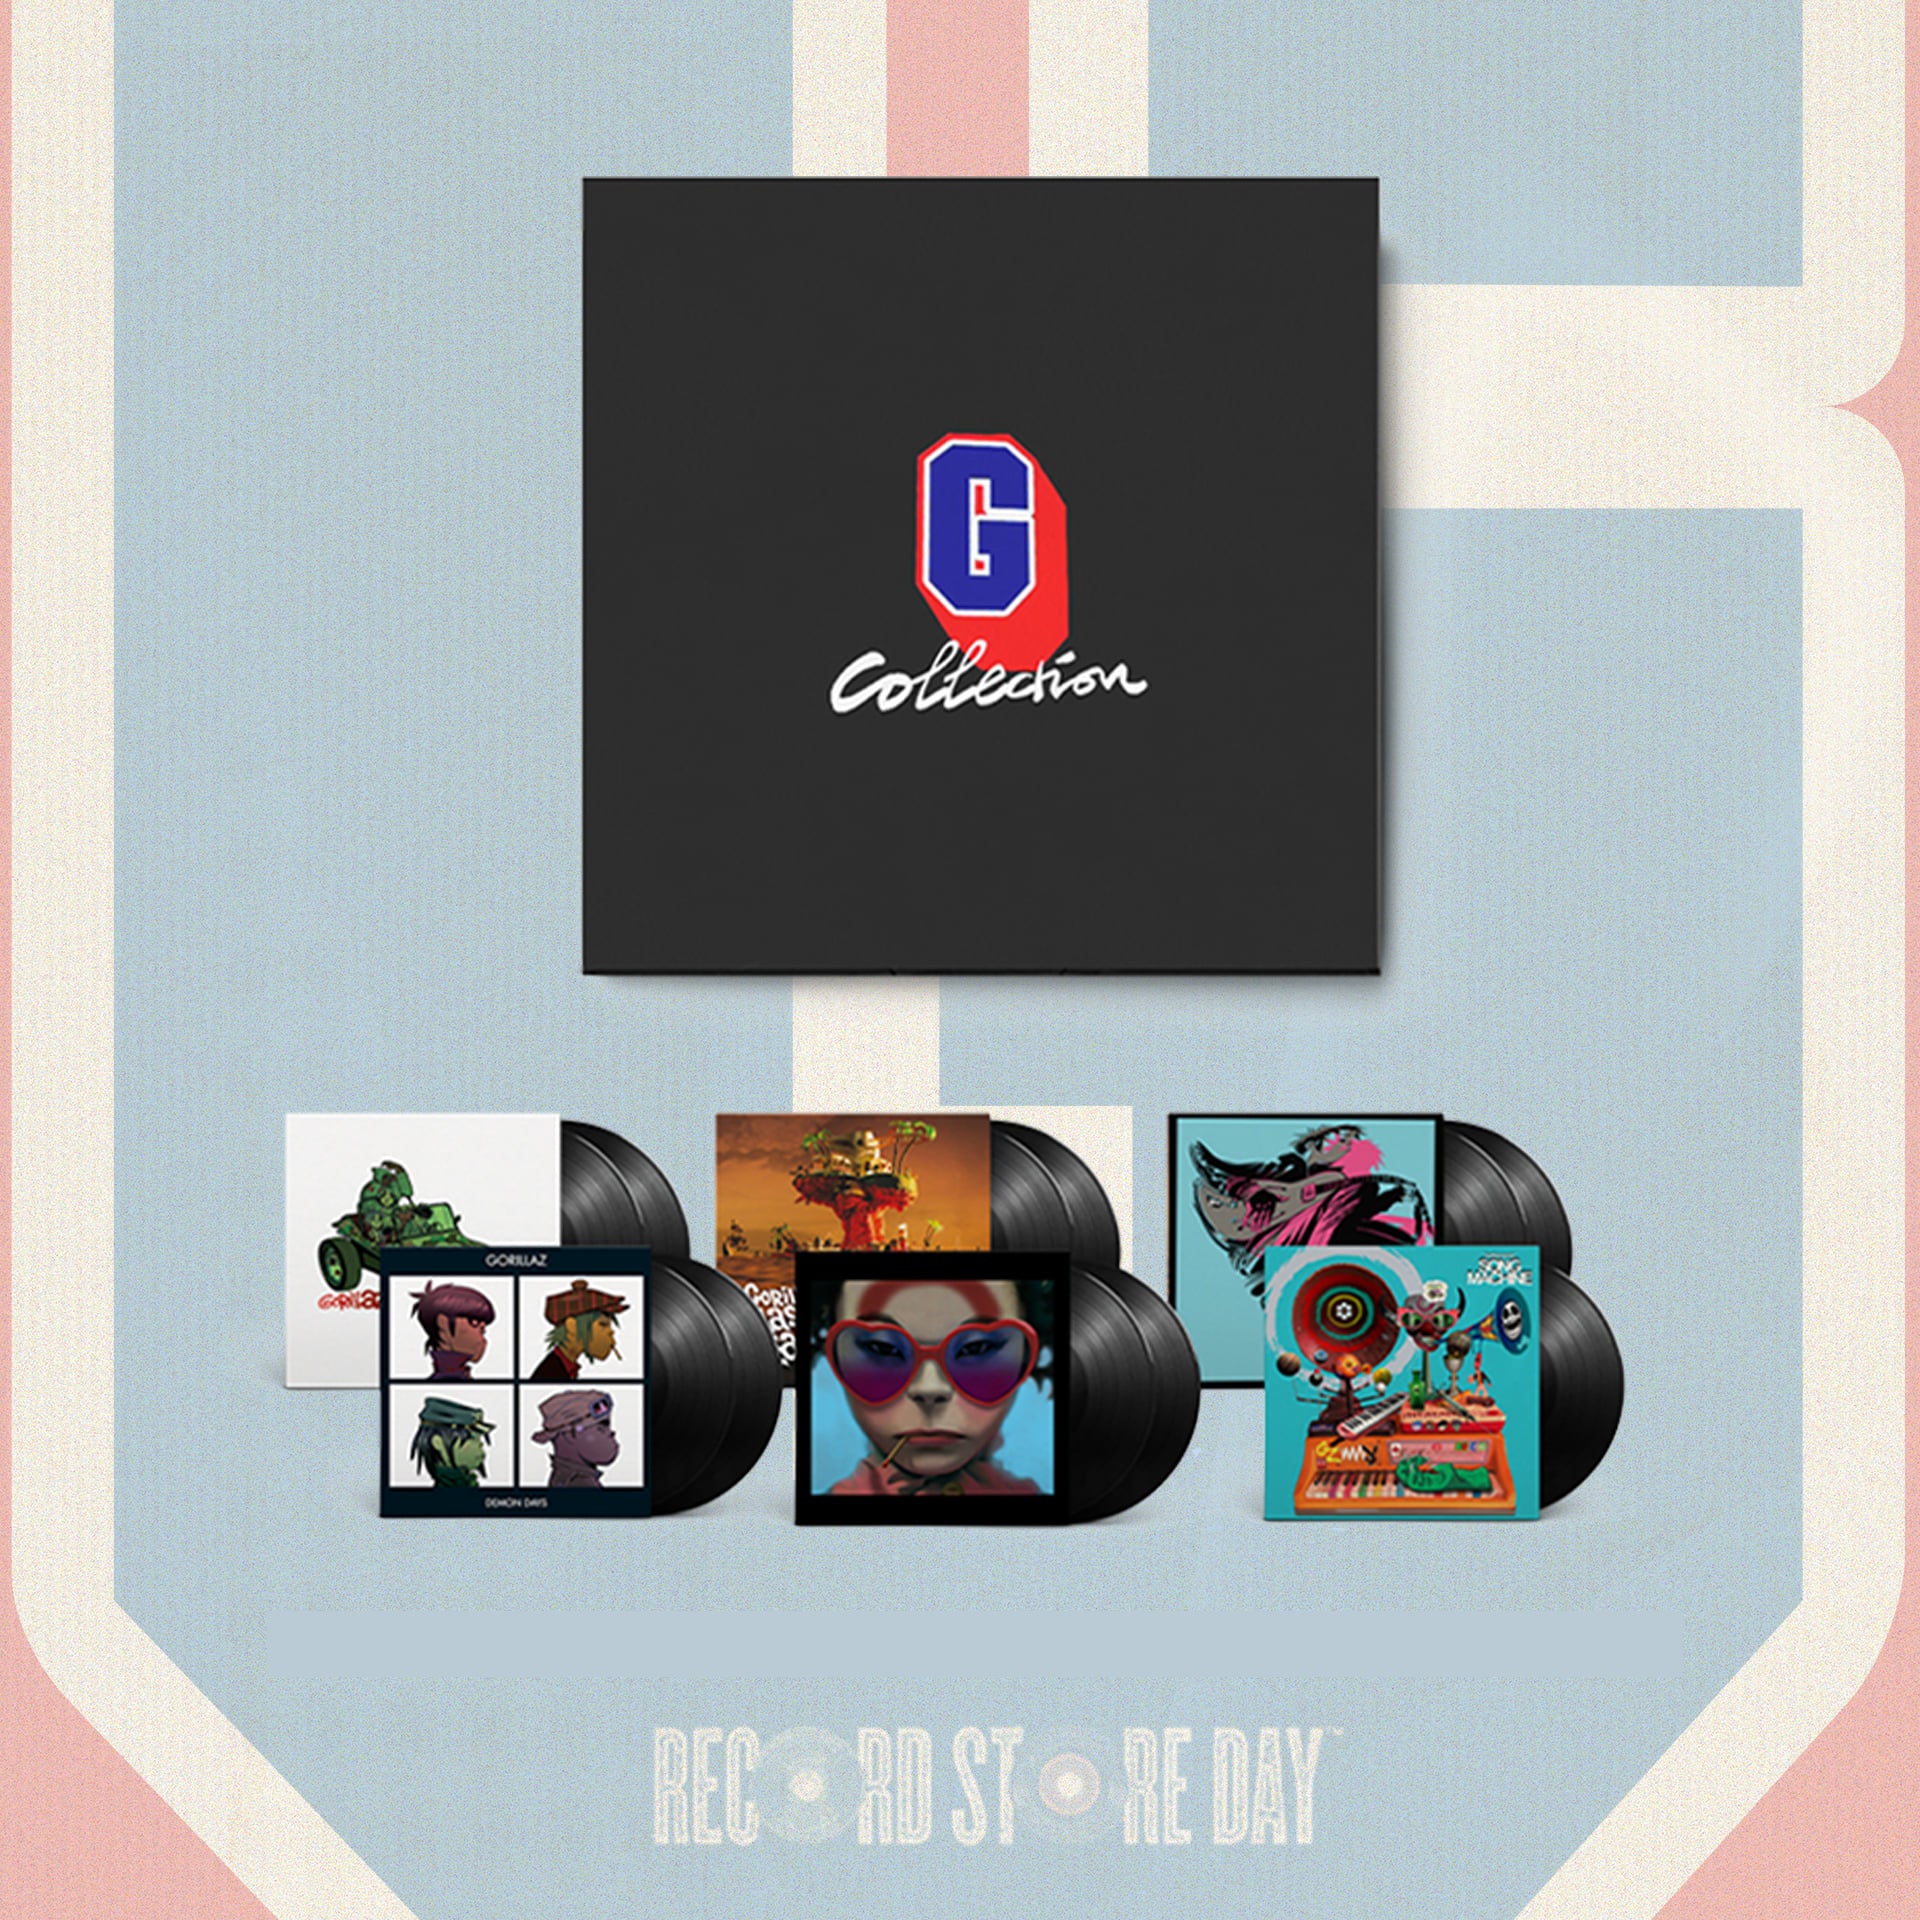 GORILLAZ - The G Collection - 4 x 2 LP Gatefold / 2 x 1 LP - Vinyl Boxset [RSD2021-JUL 17]